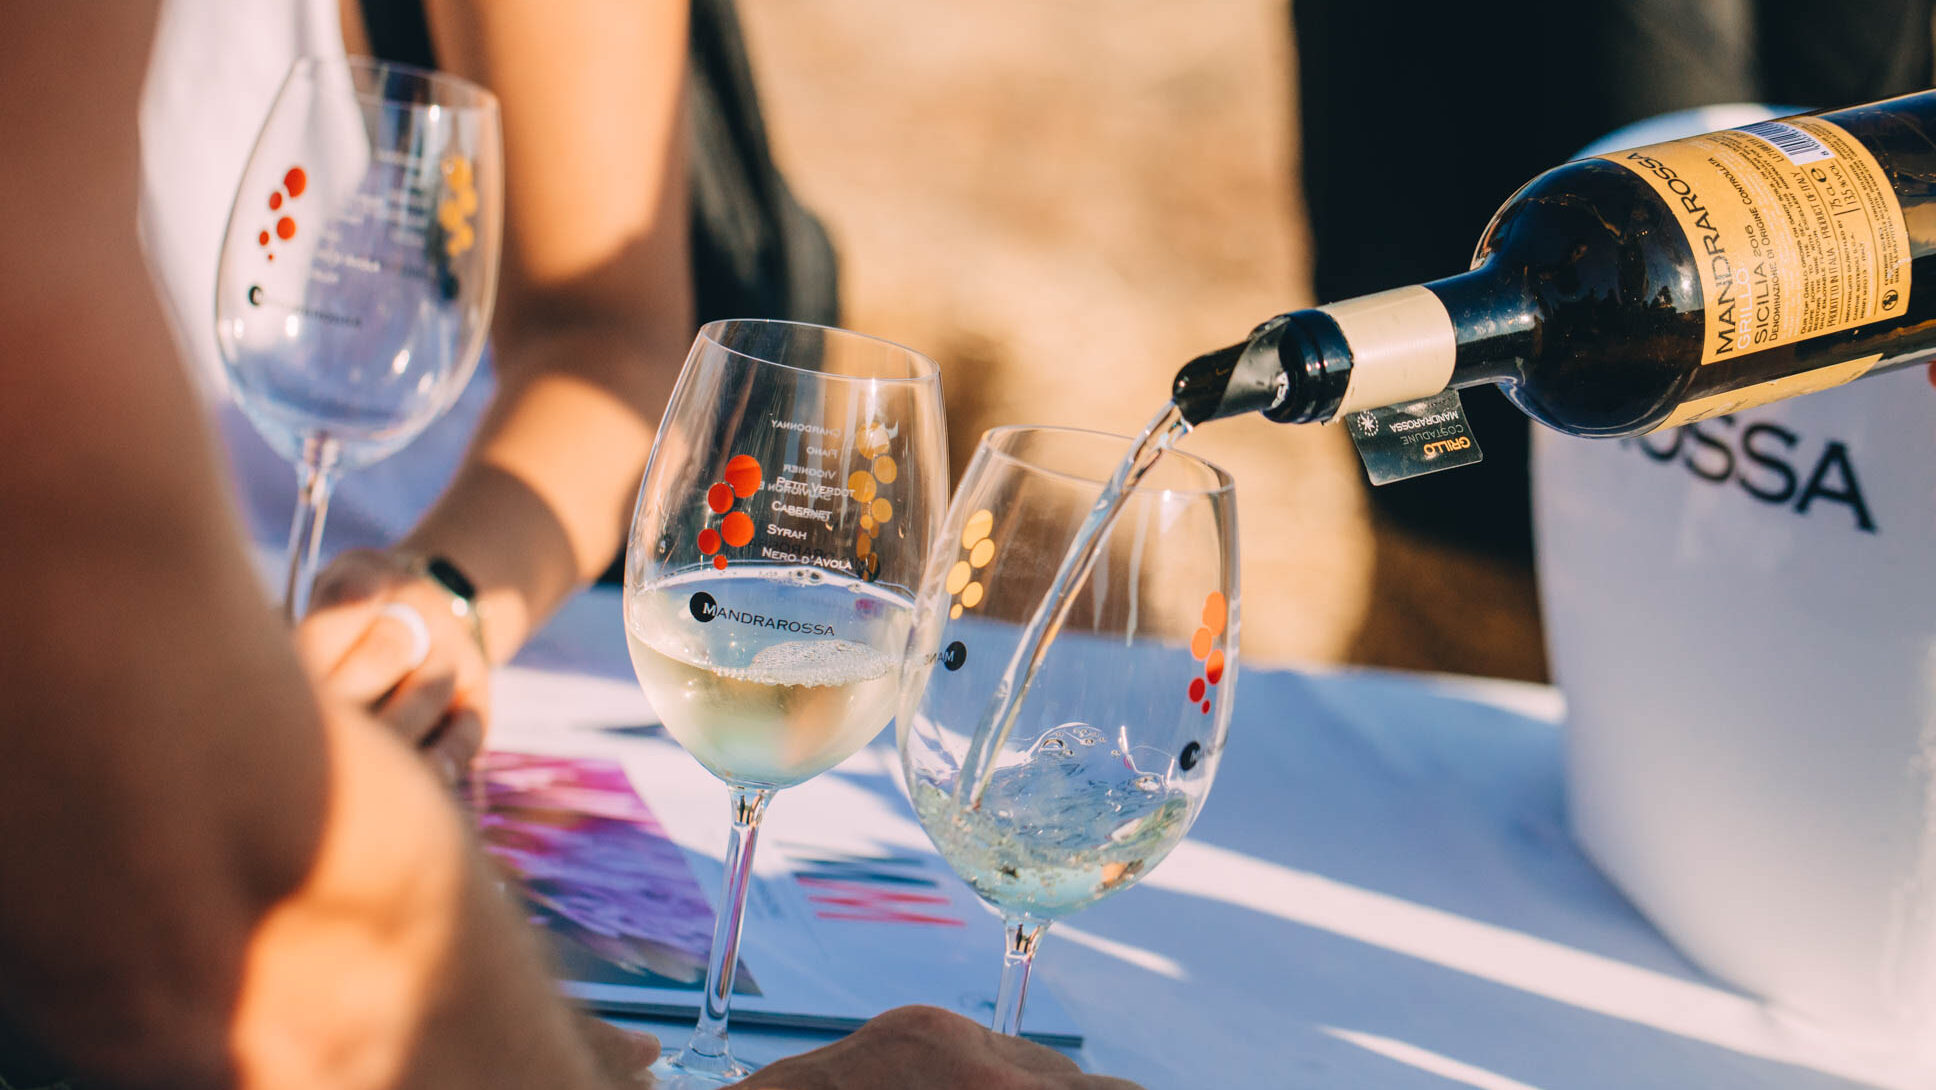 moments of Mandrarossa Vineyard Tour, wine poured into glasses